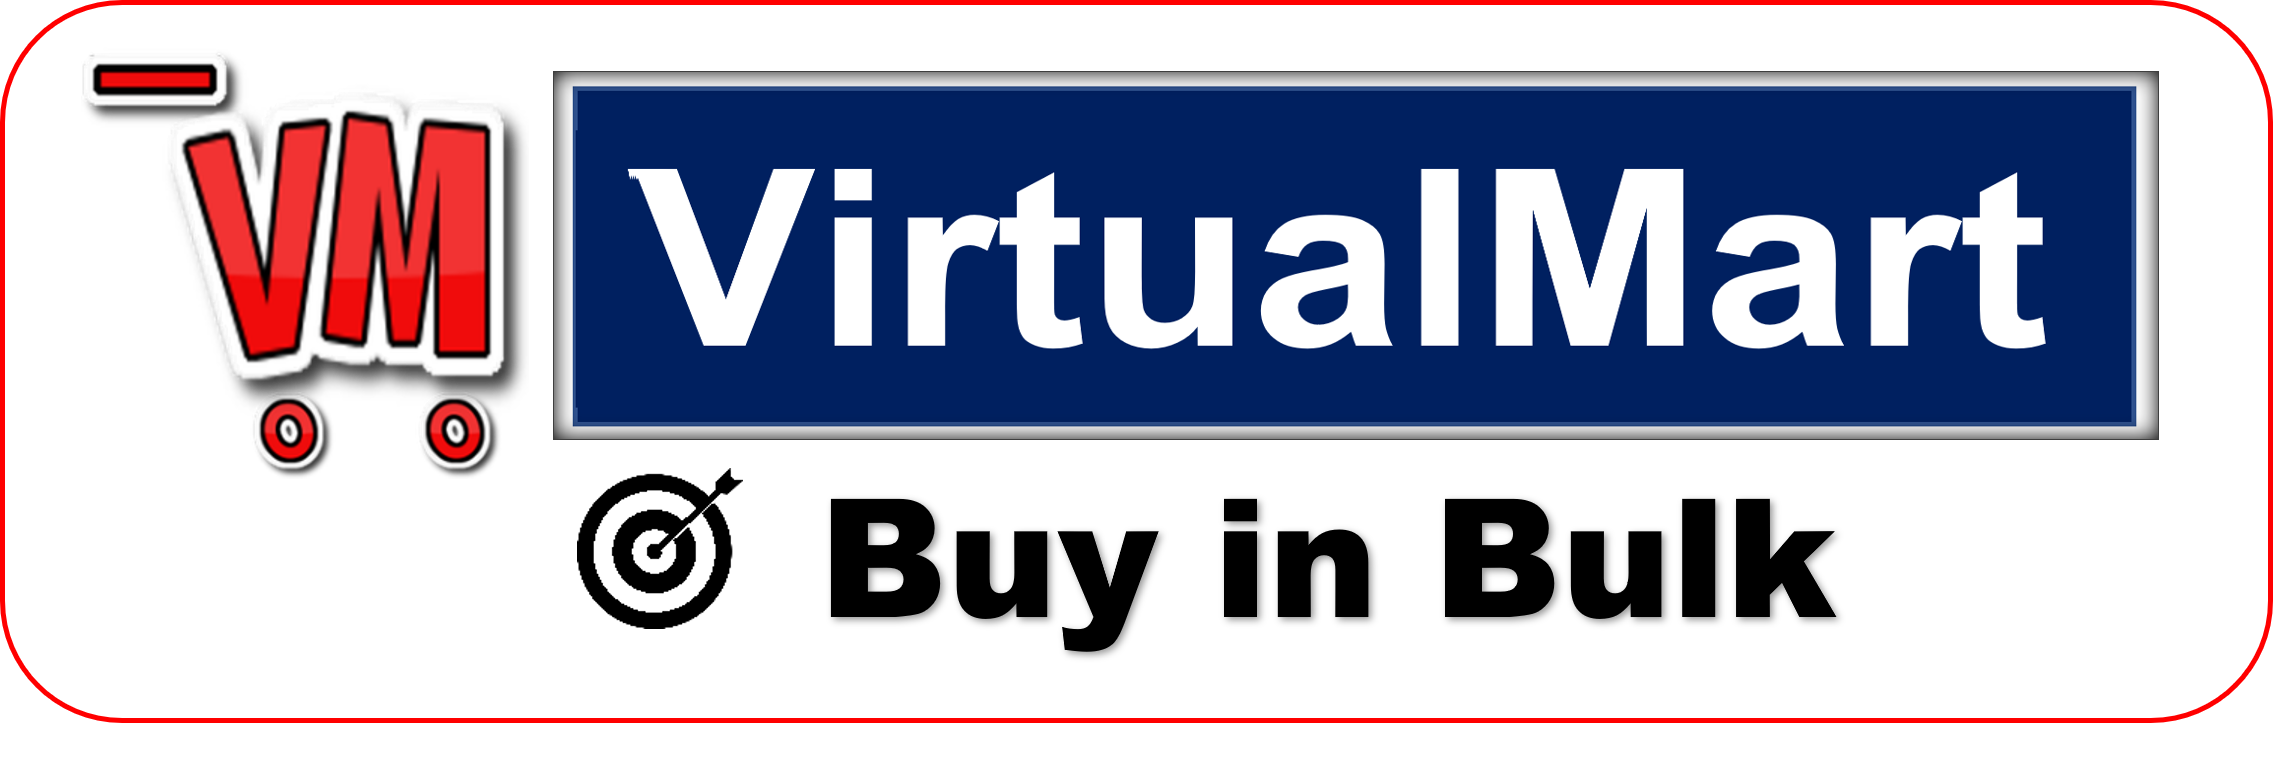 Virtual Mart